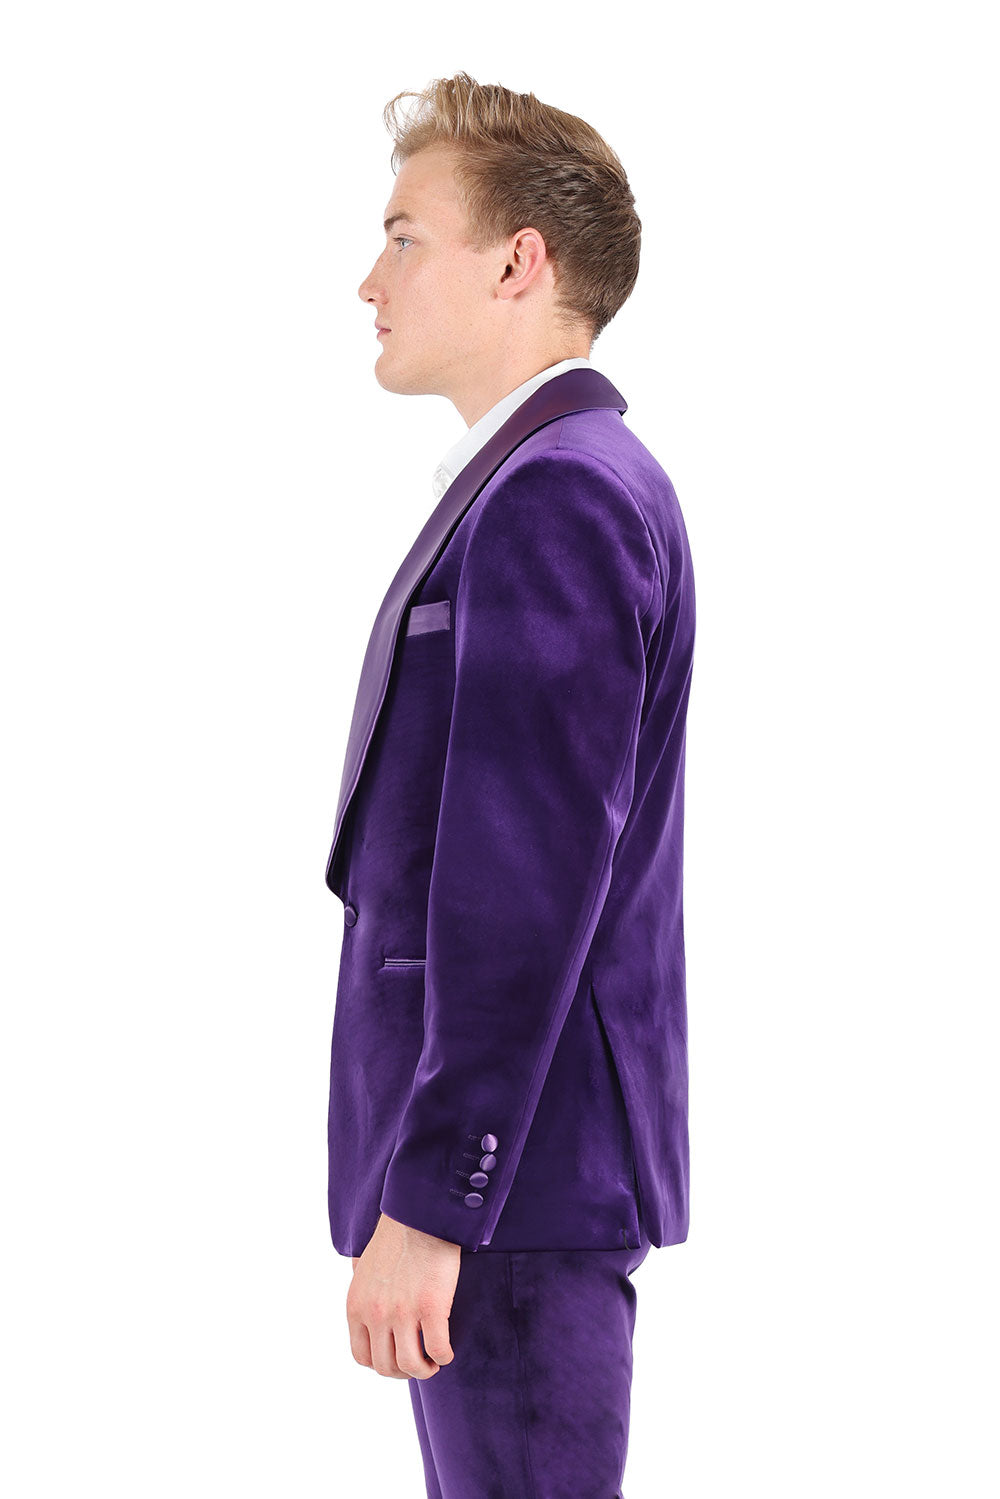 BARABAS Men's Velvet Shiny Finish Shawl Lapel Blazer 3BL06 Purple